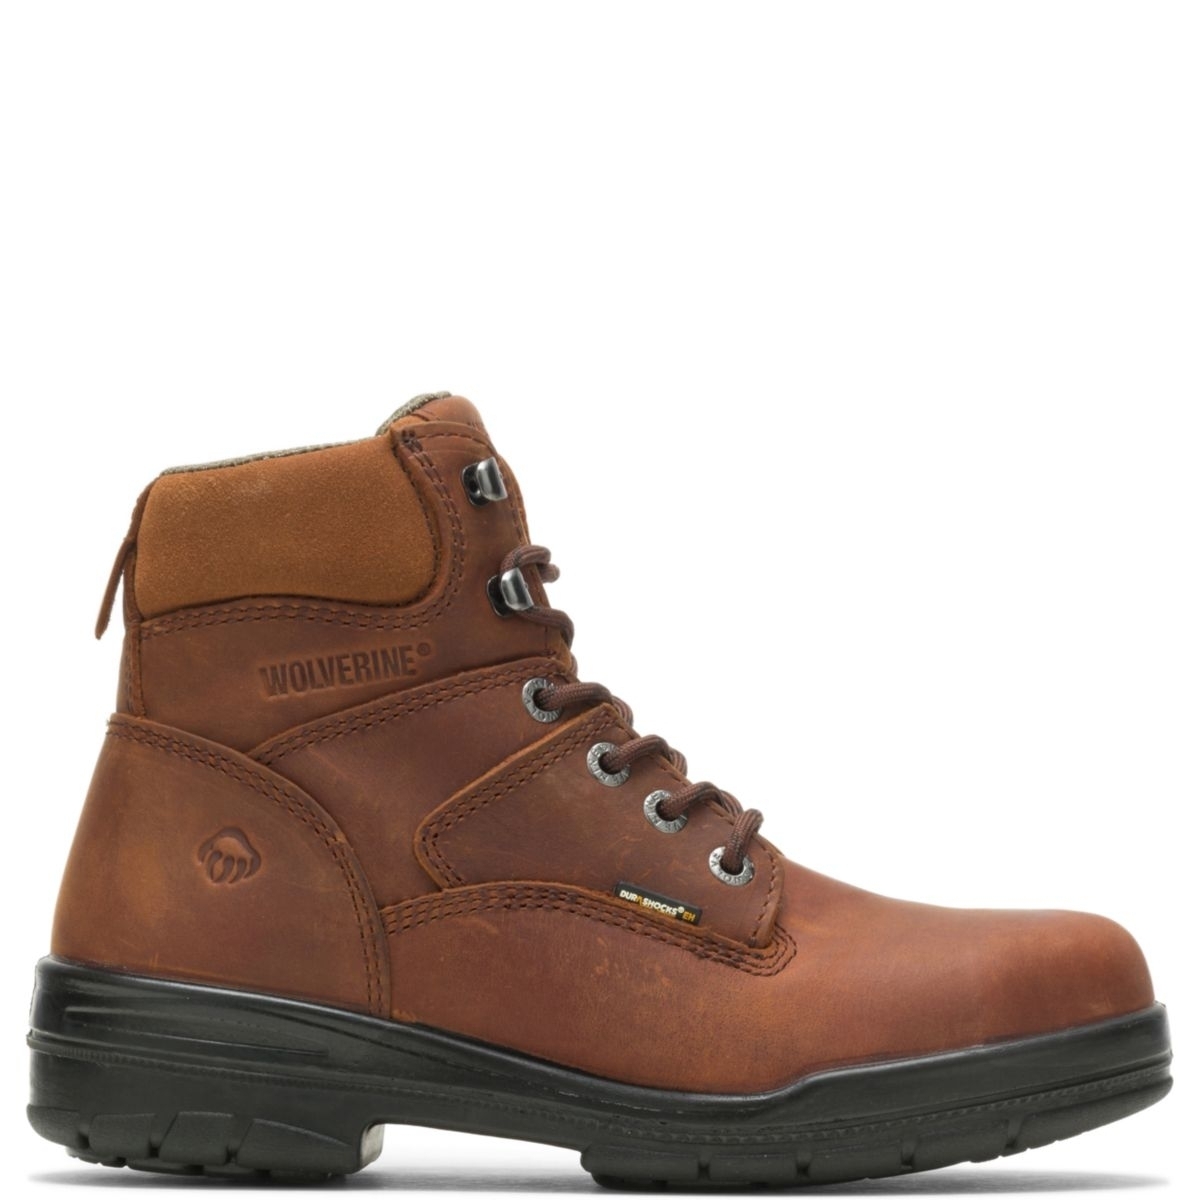 WOLVERINE Men's 6 DuraShocksÂ® Slip Resistant Steel Toe Work Boot Canyon - W02053 BRN/STL - BRN/STL, 8